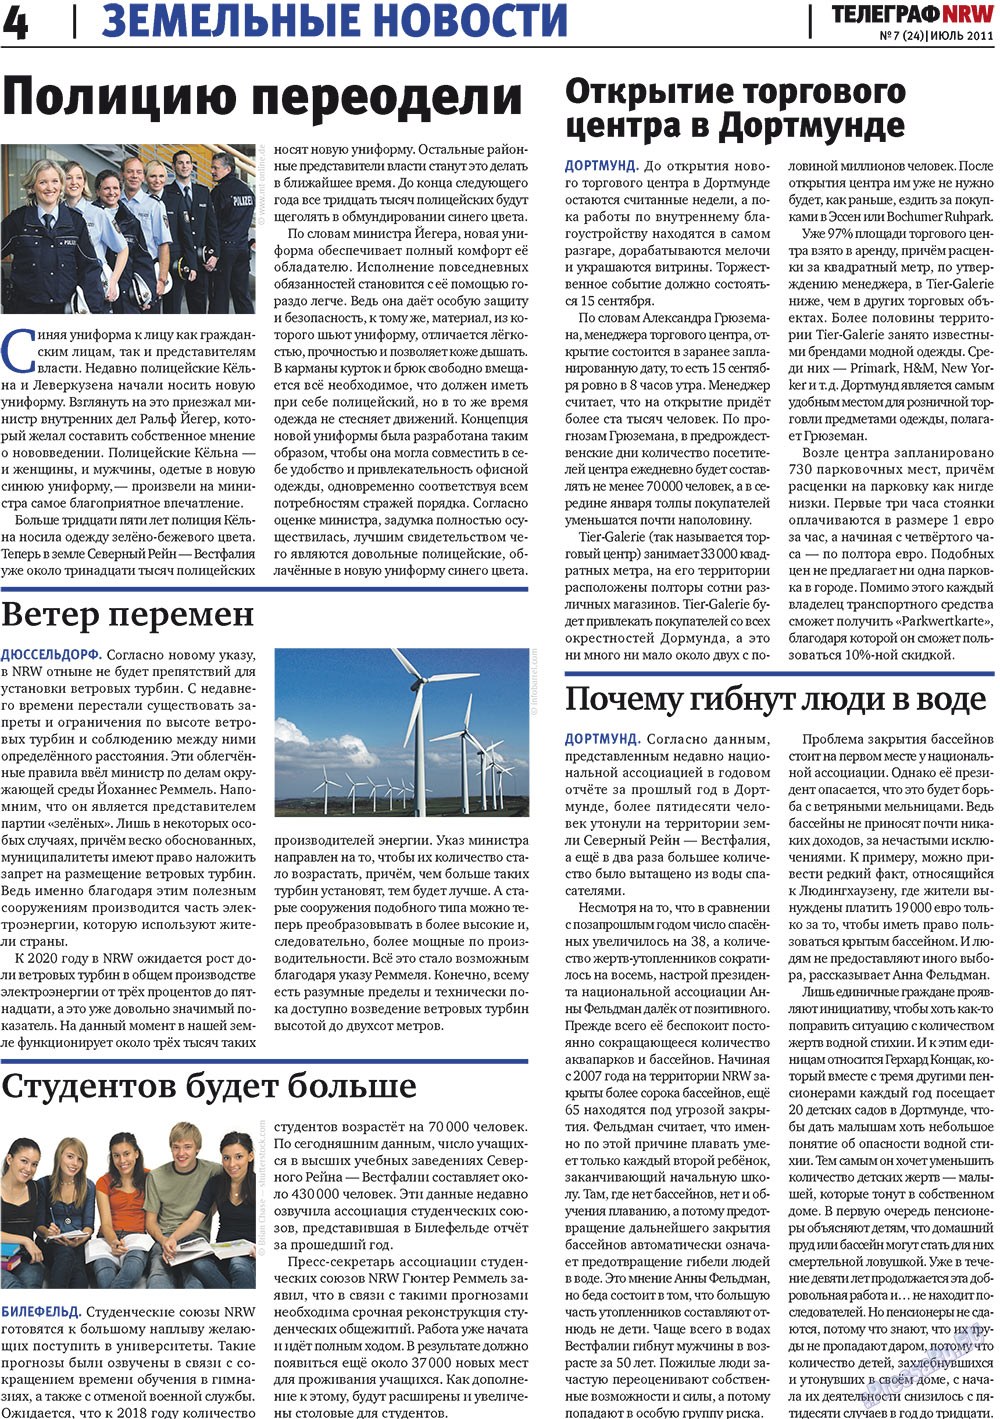 Телеграф NRW, газета. 2011 №7 стр.4